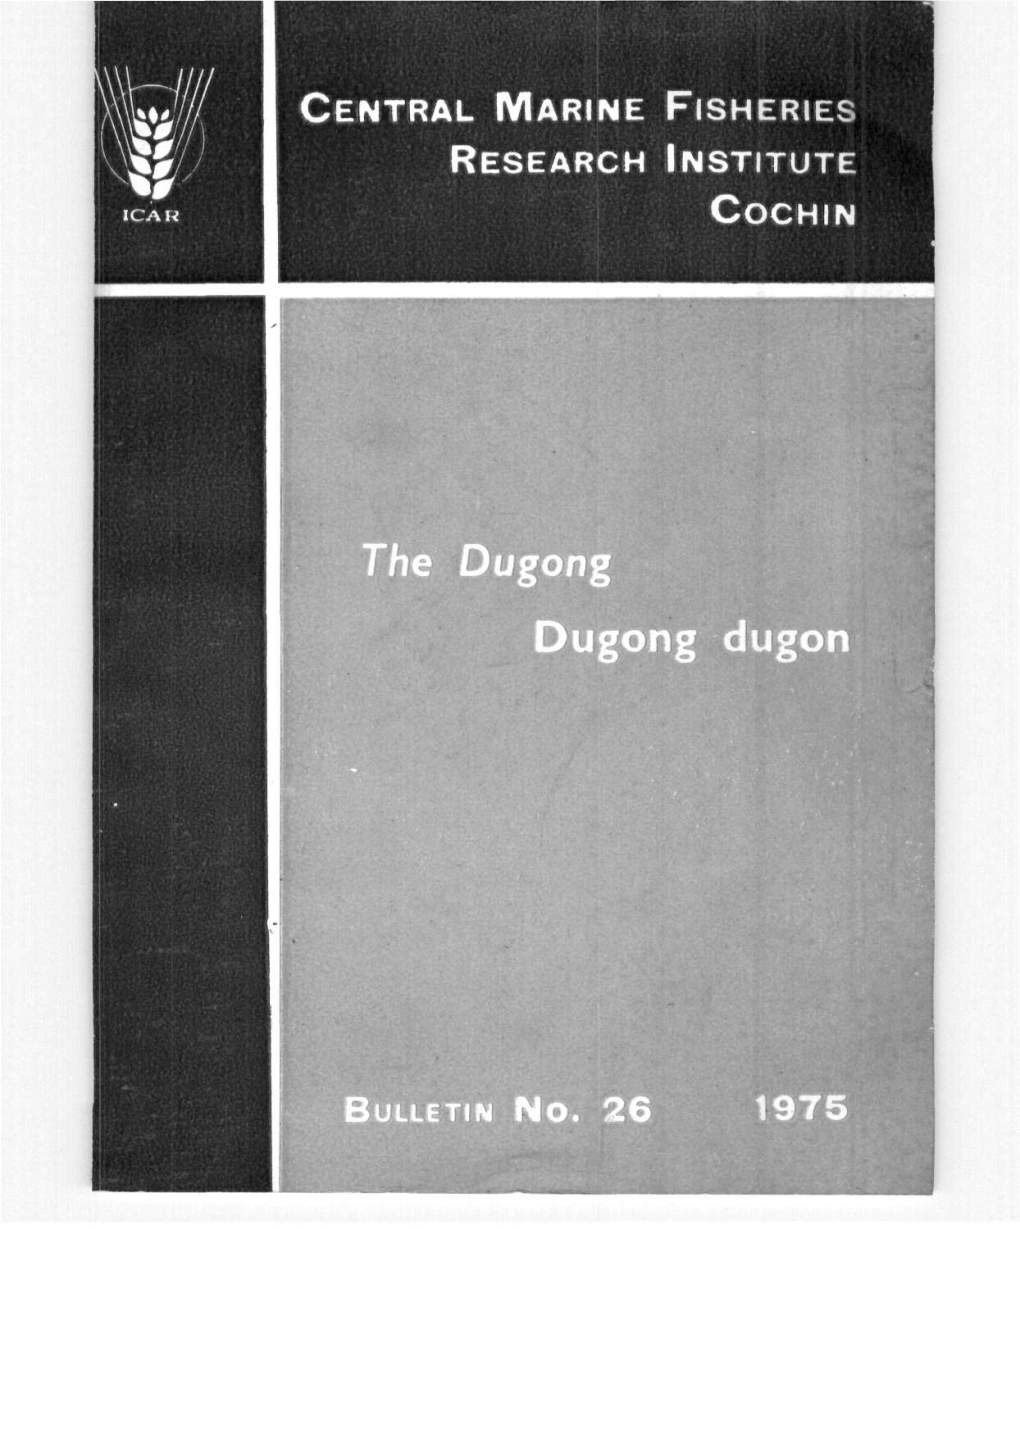 The Dugdn Dugong Dugon